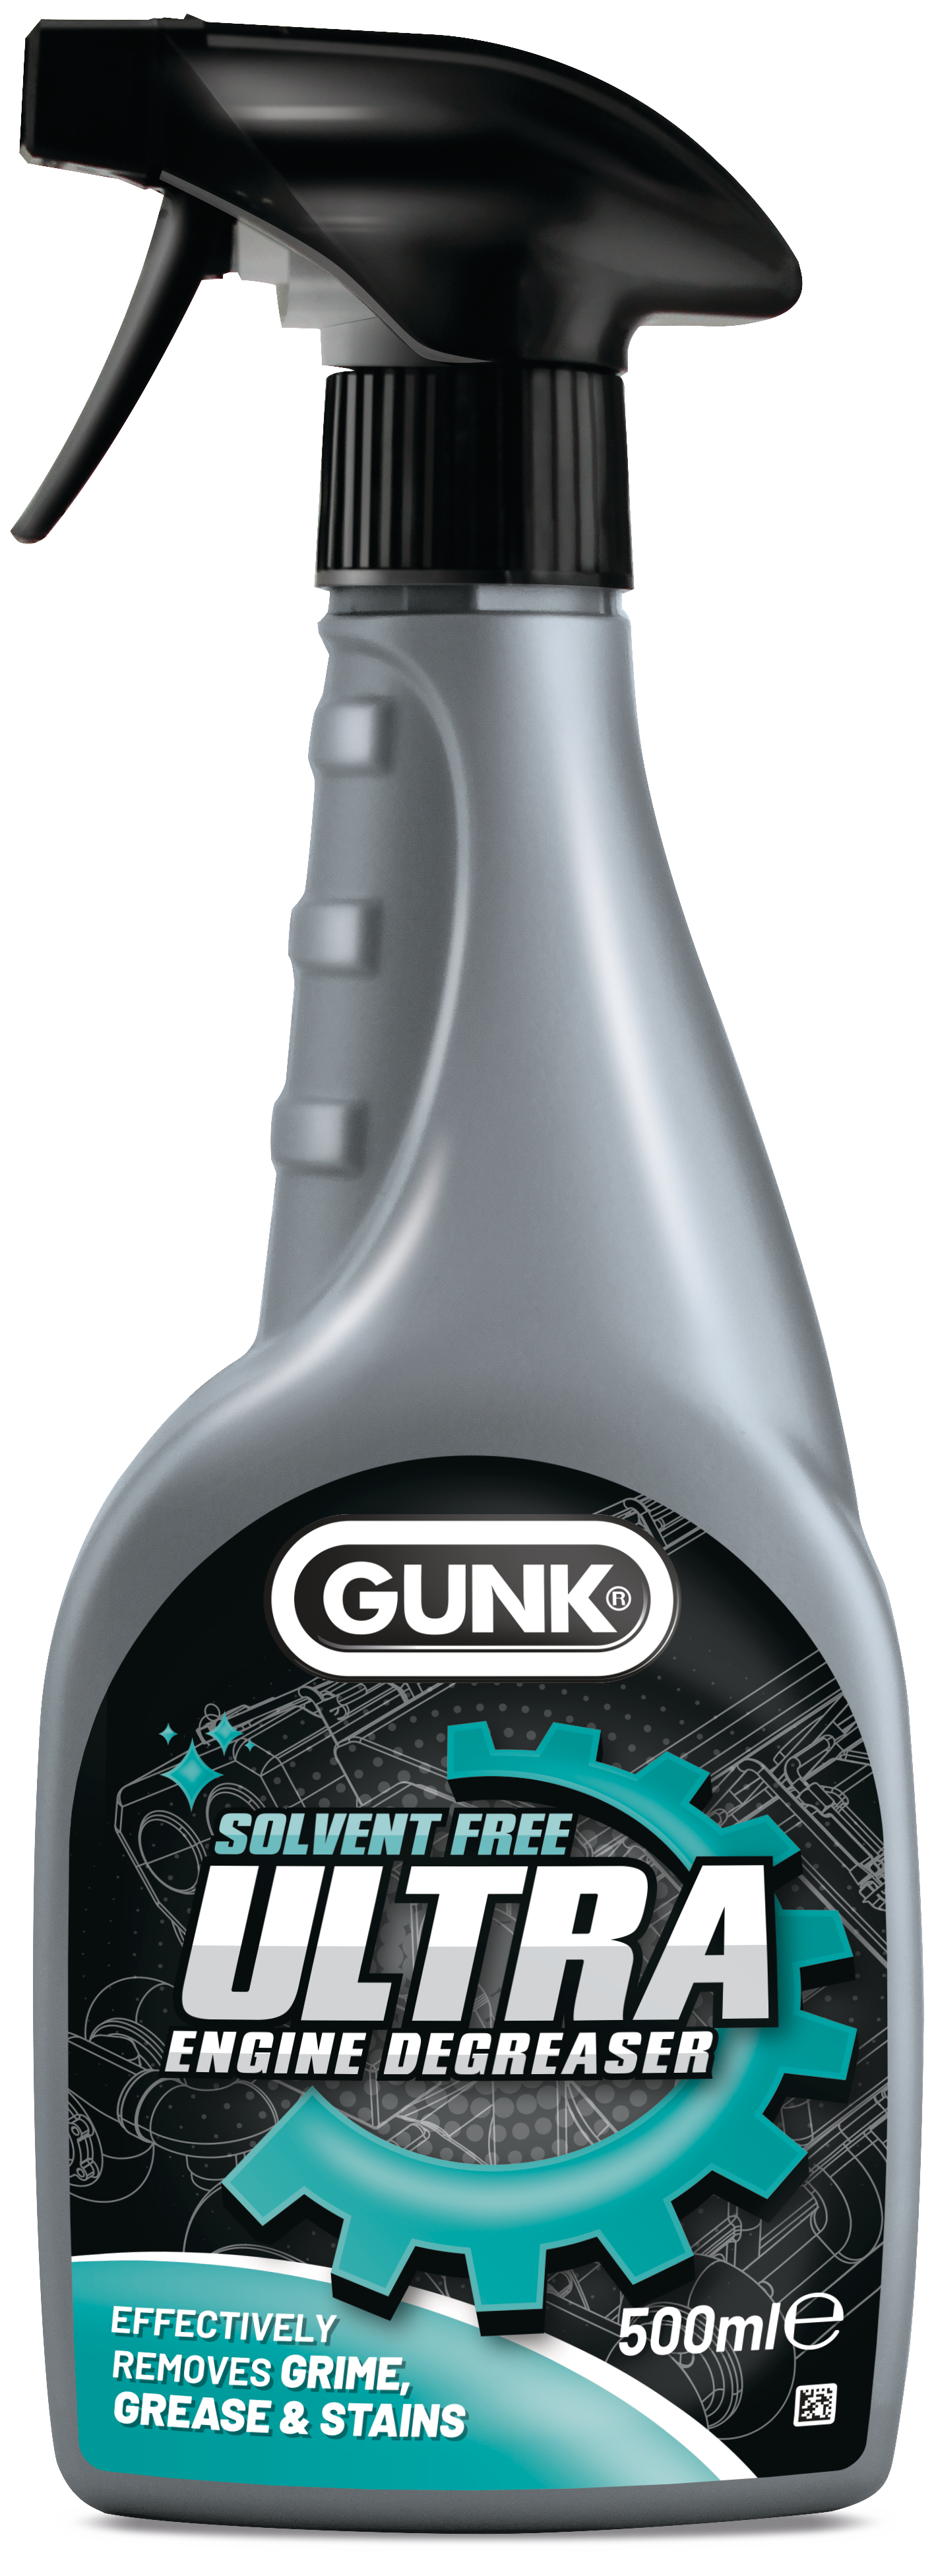 Gunk Ultra Engine Degreaser 500ml